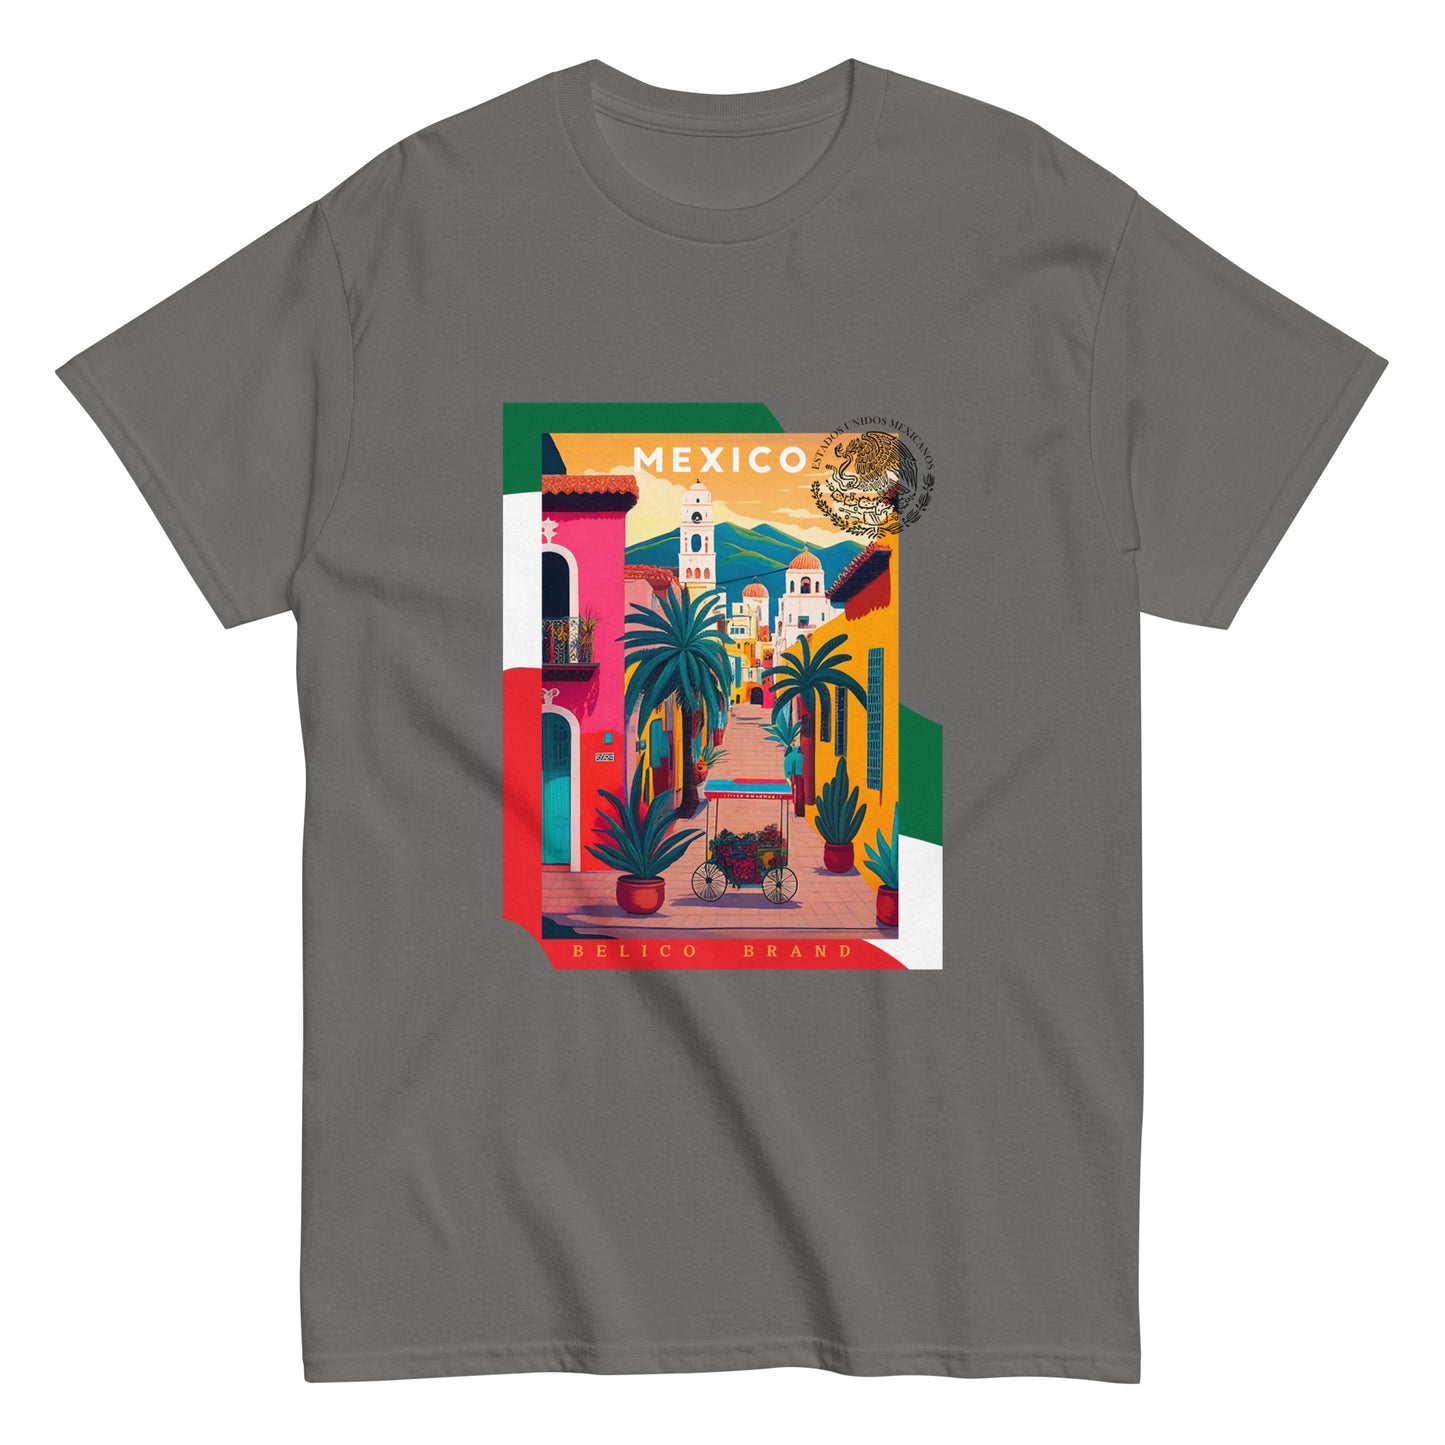 Mexico Illustration T-Shirt